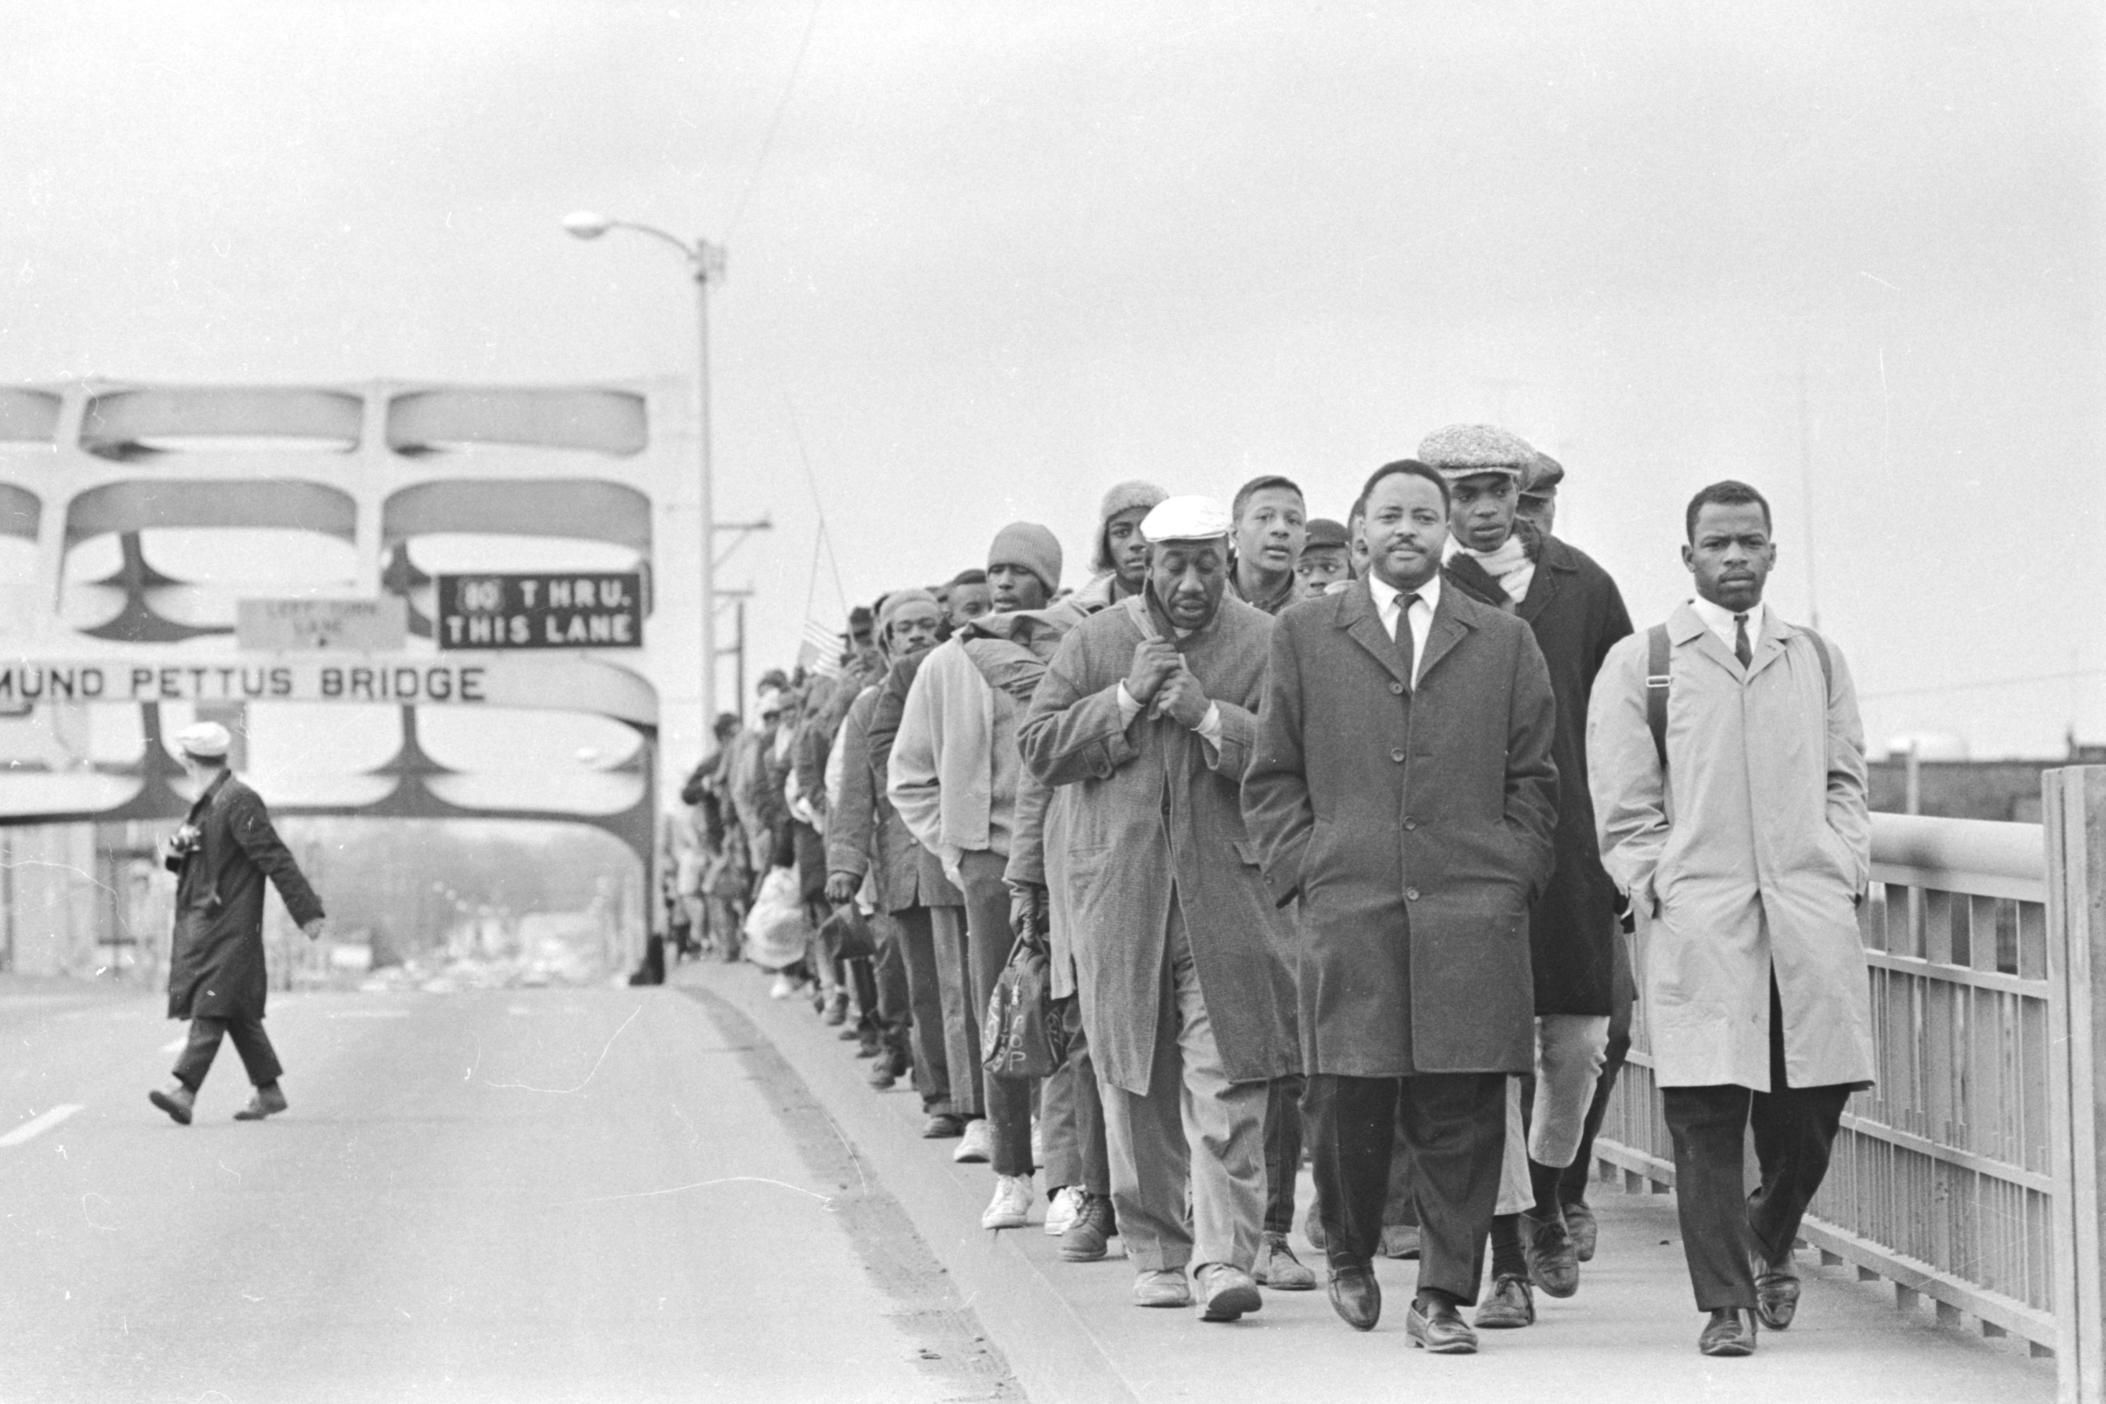 John Lewis with fellow protesters at the Edmund Pettus Bridge in Selma, Alabama, 1965.